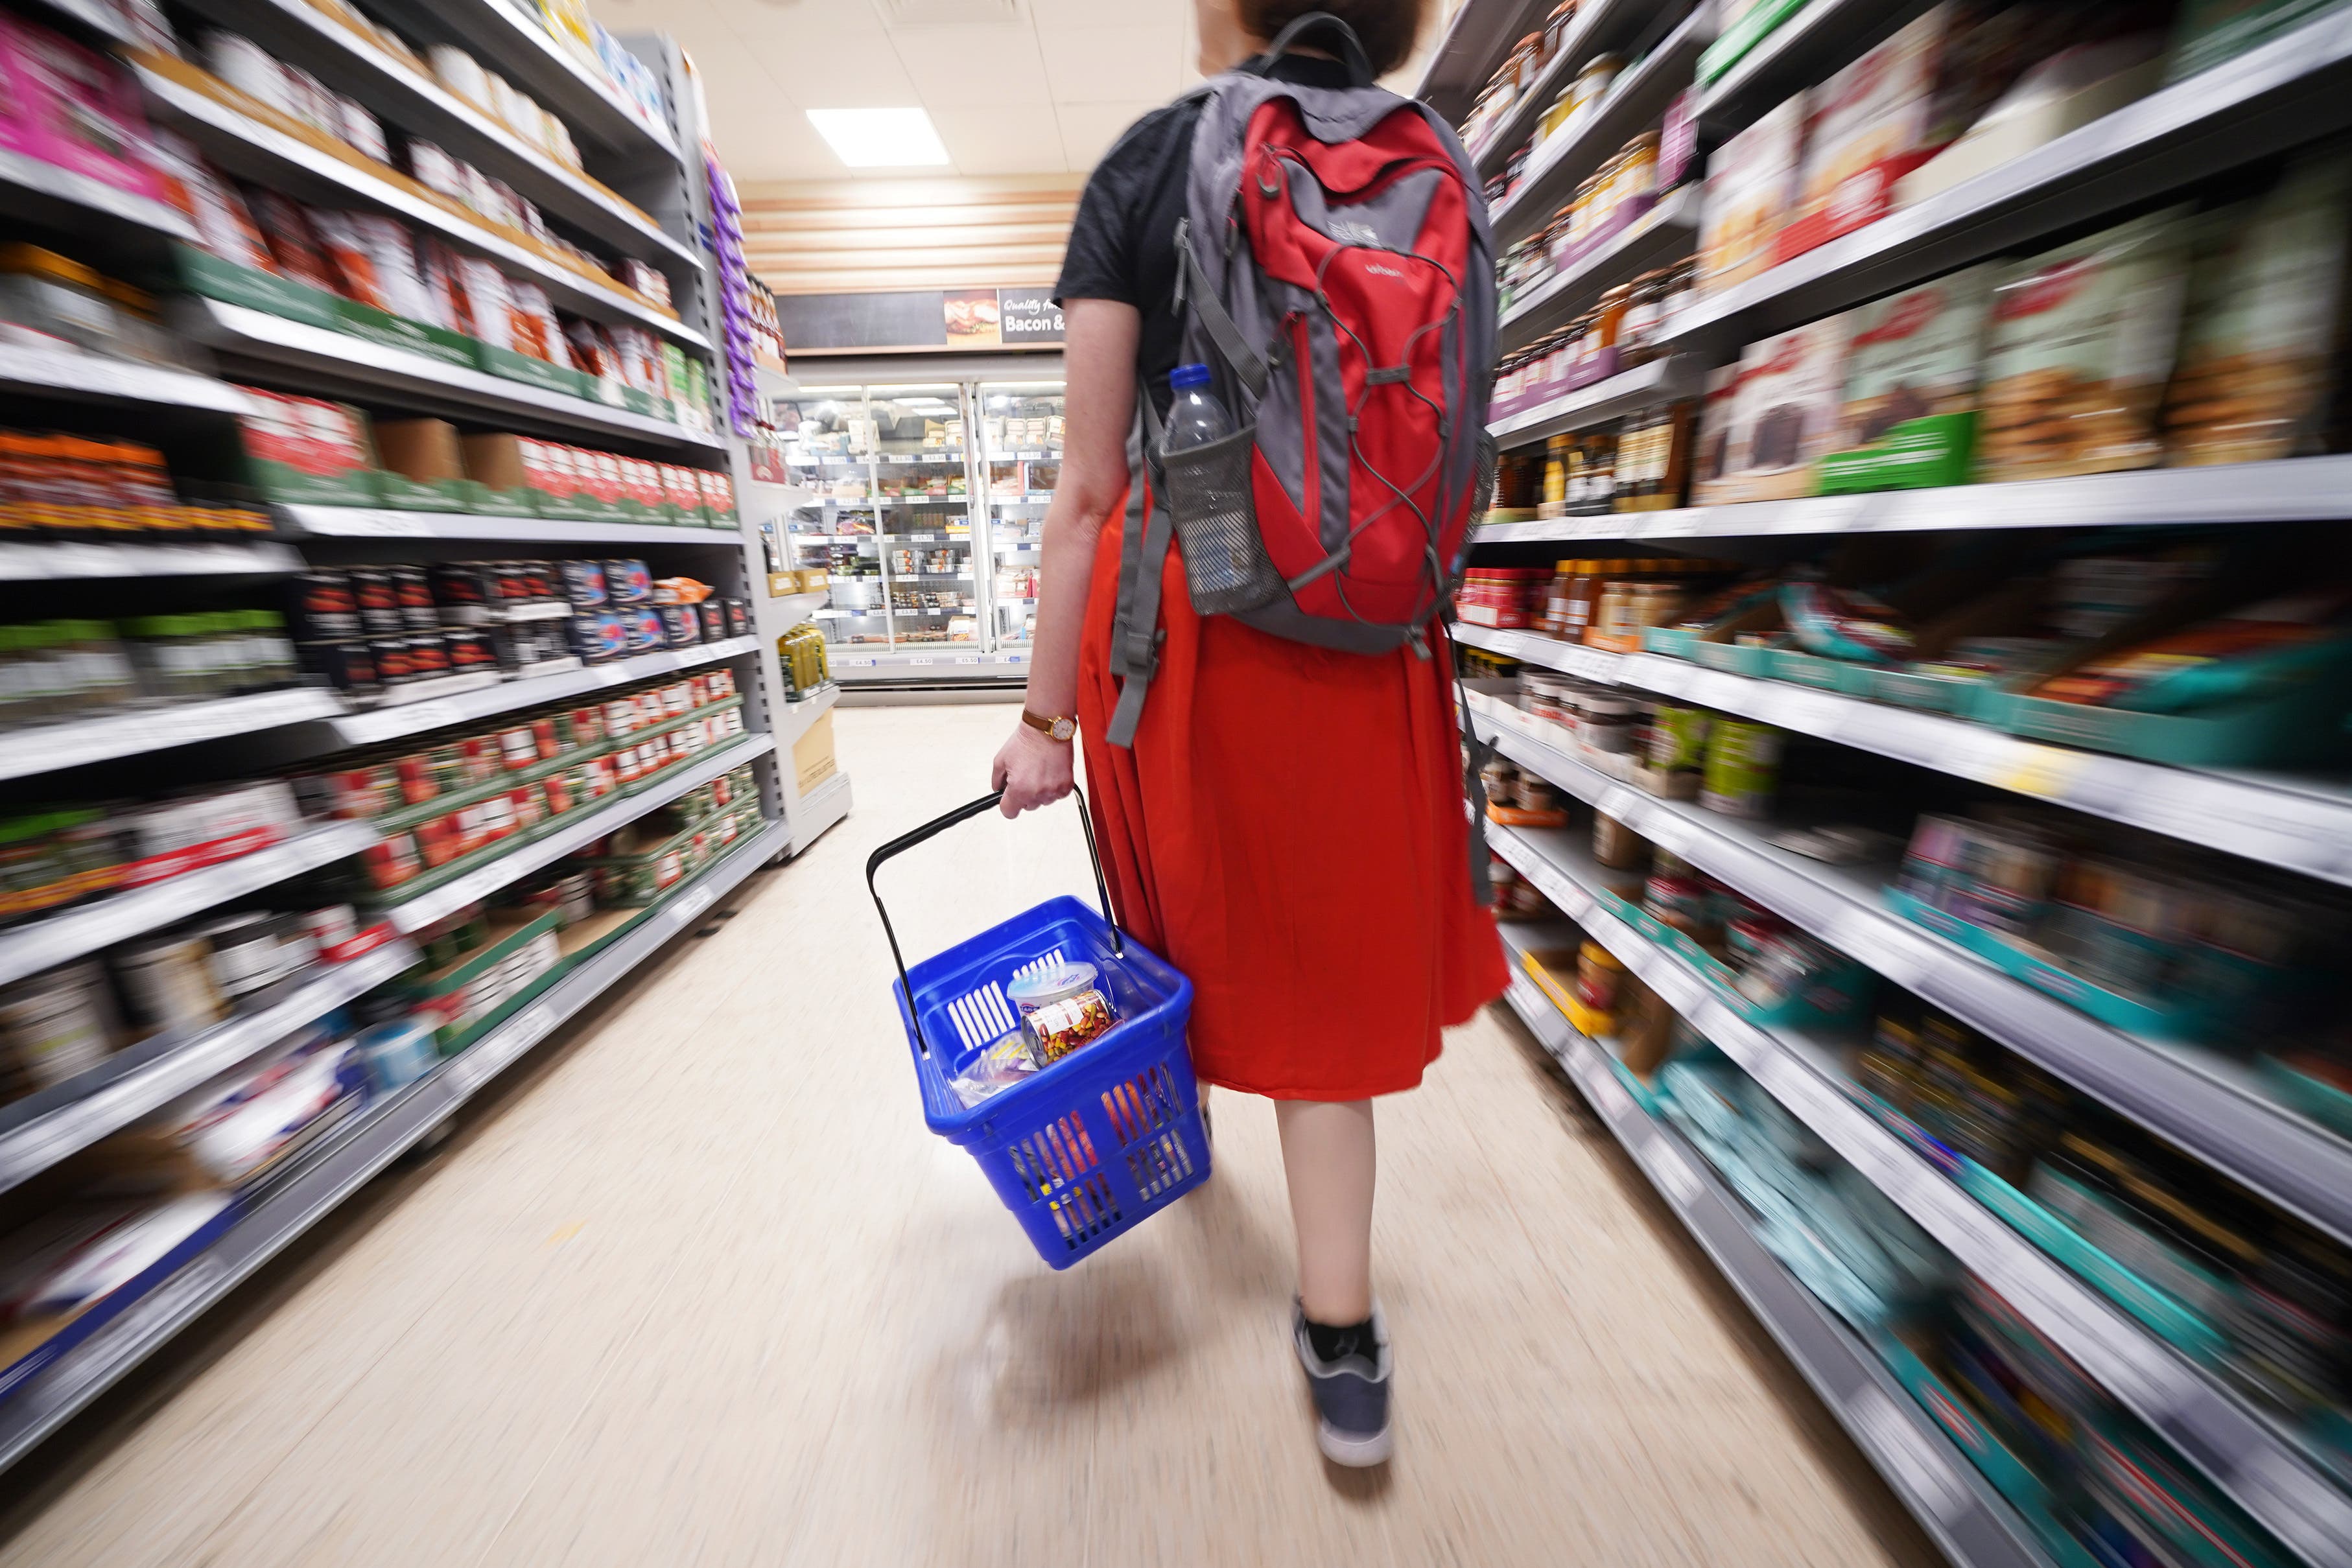 A shopper walking through the aisle of a Tesco supermarket